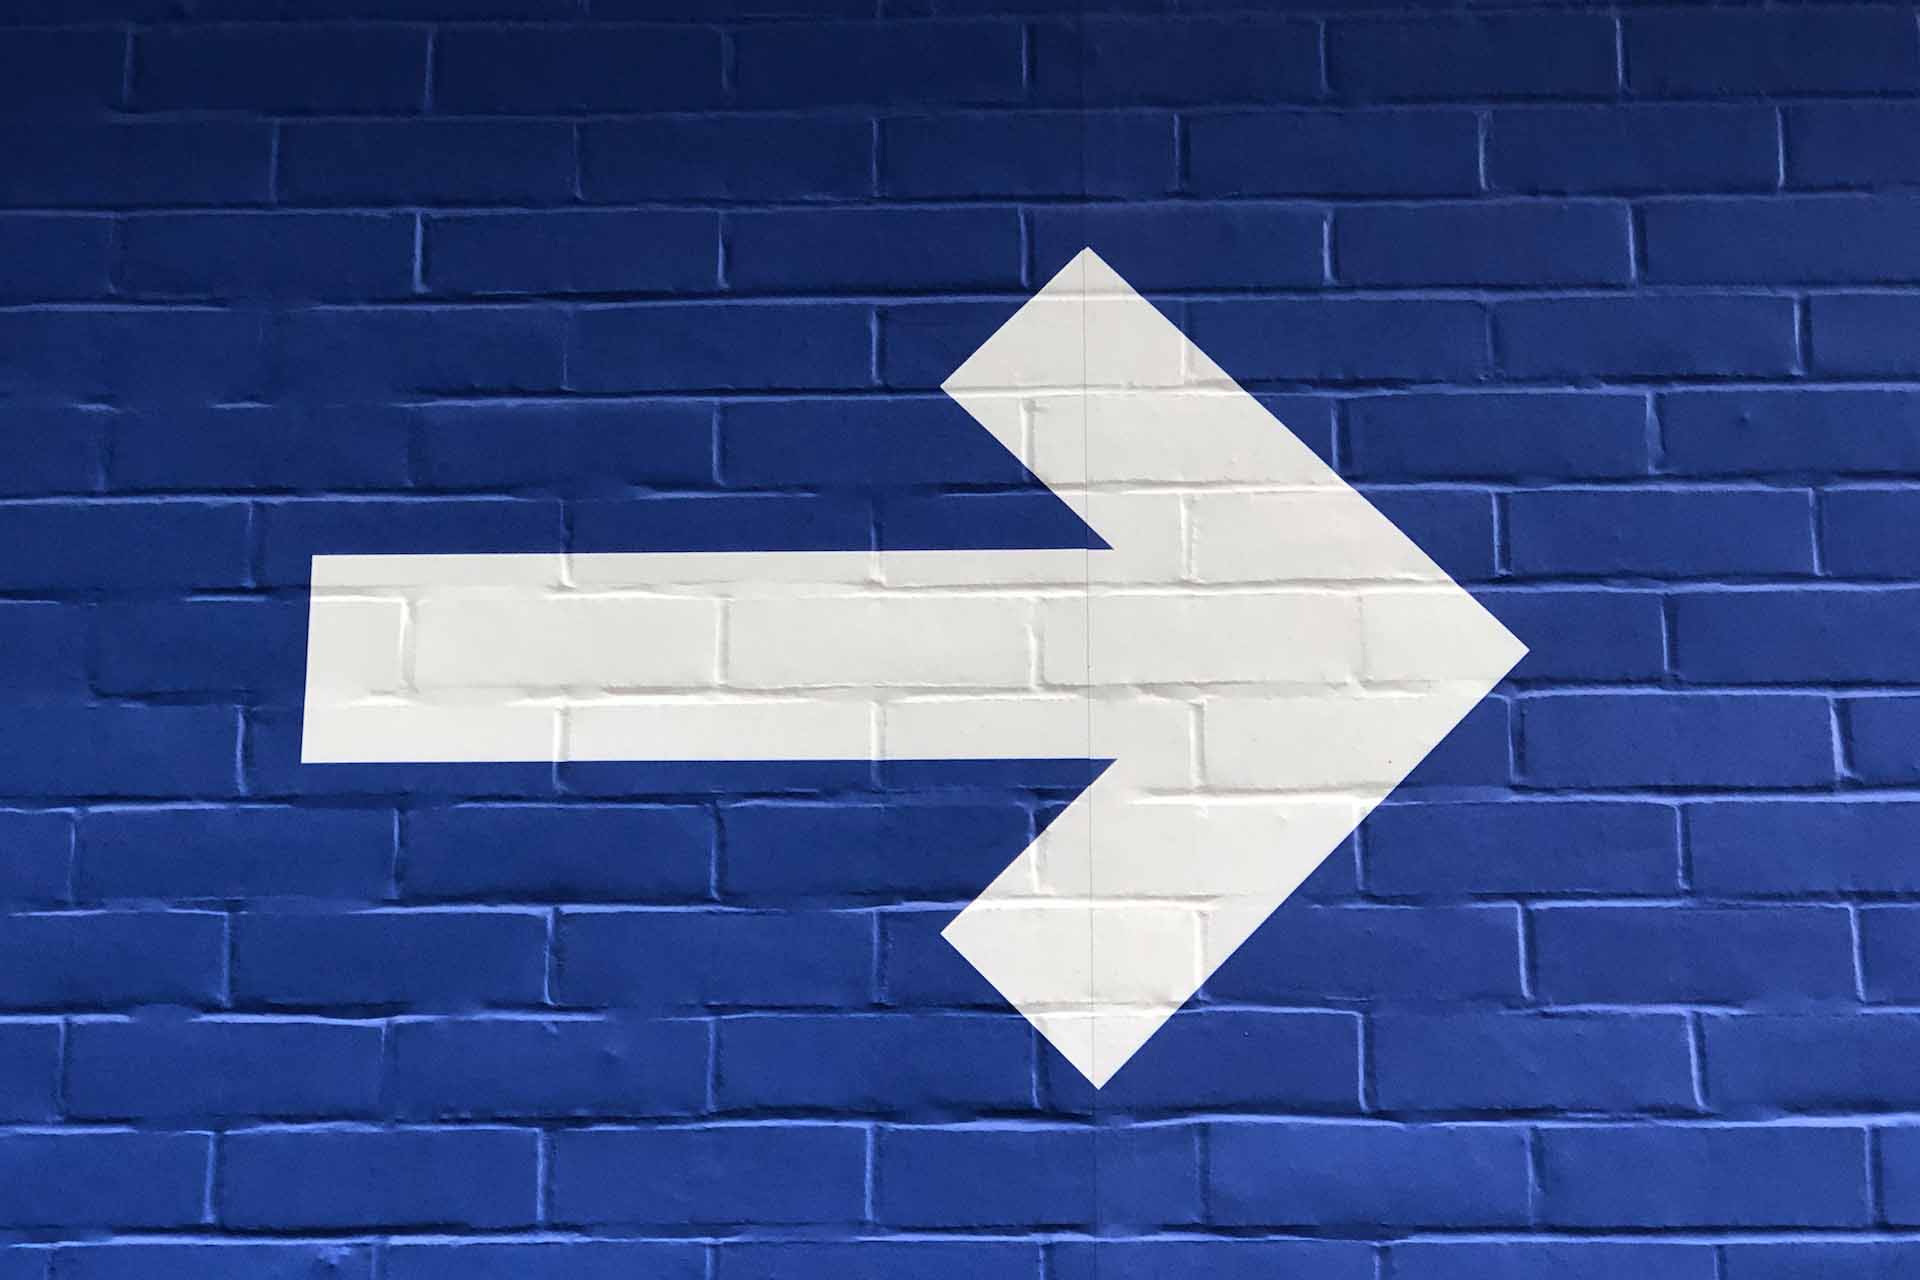 White arrow against a blue background, symbolizing application modernization trends moving businesses forward